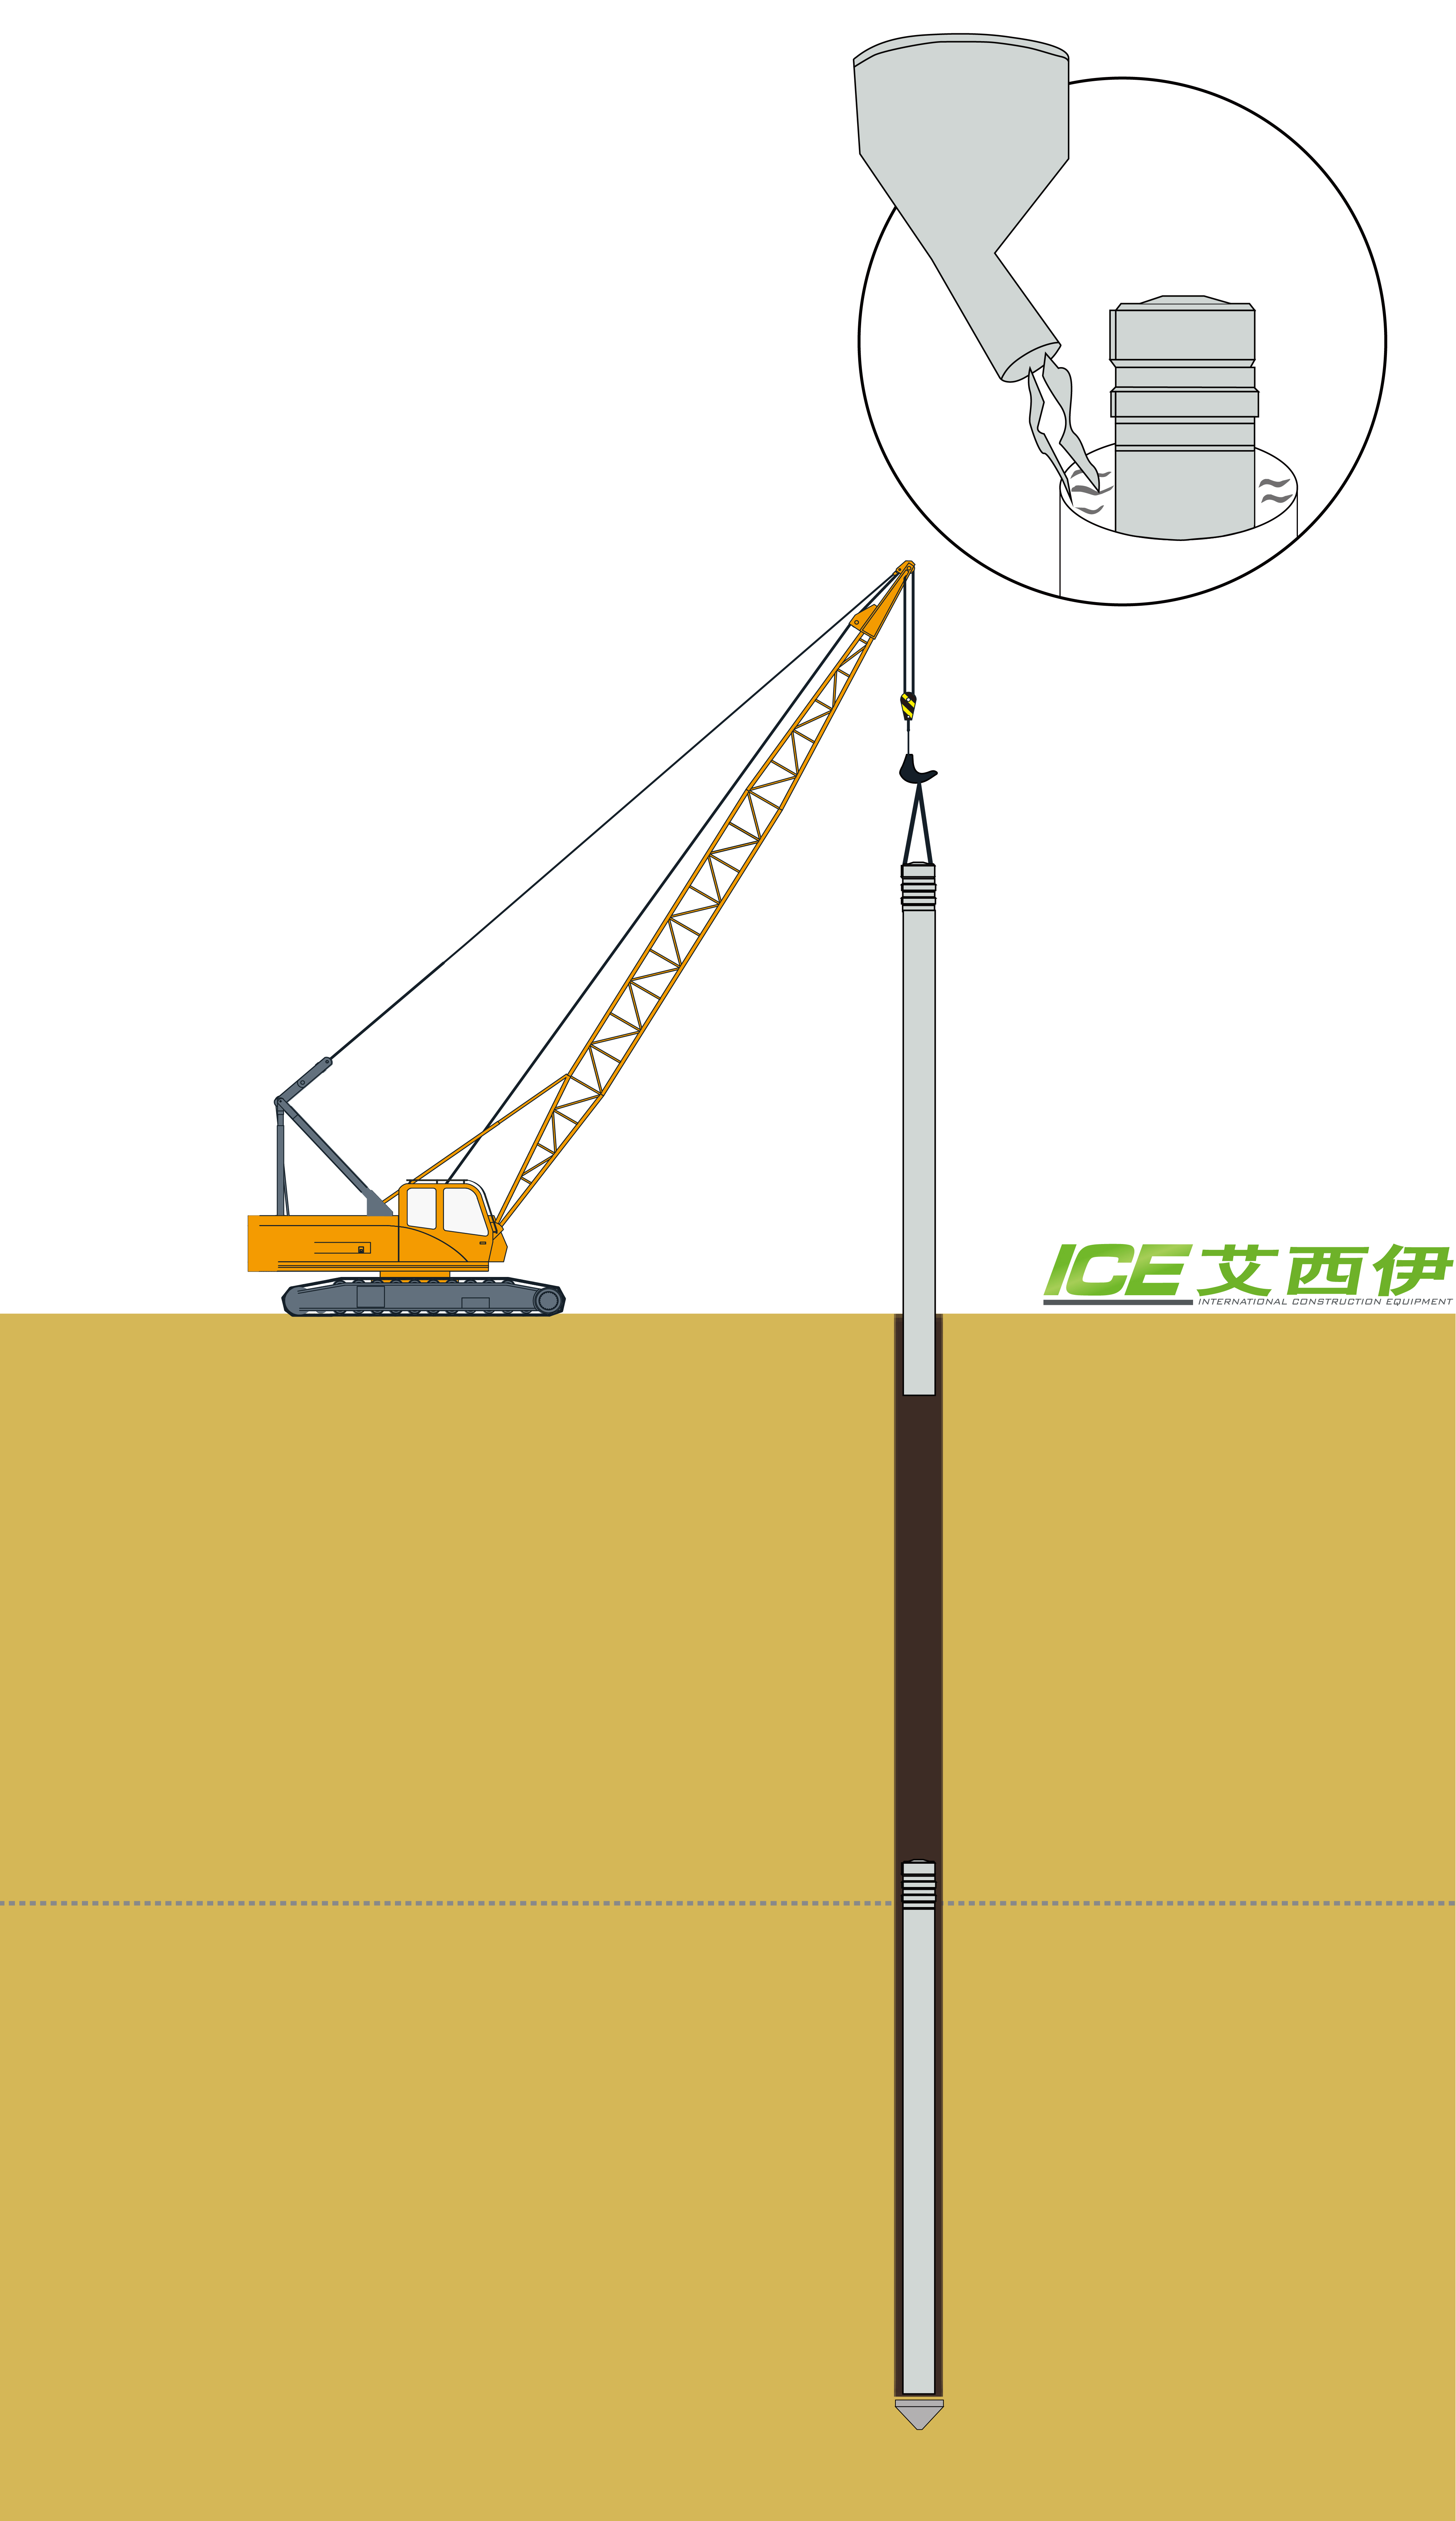 ICE,precast concrete pile,vibro compaction pile,impact hammer